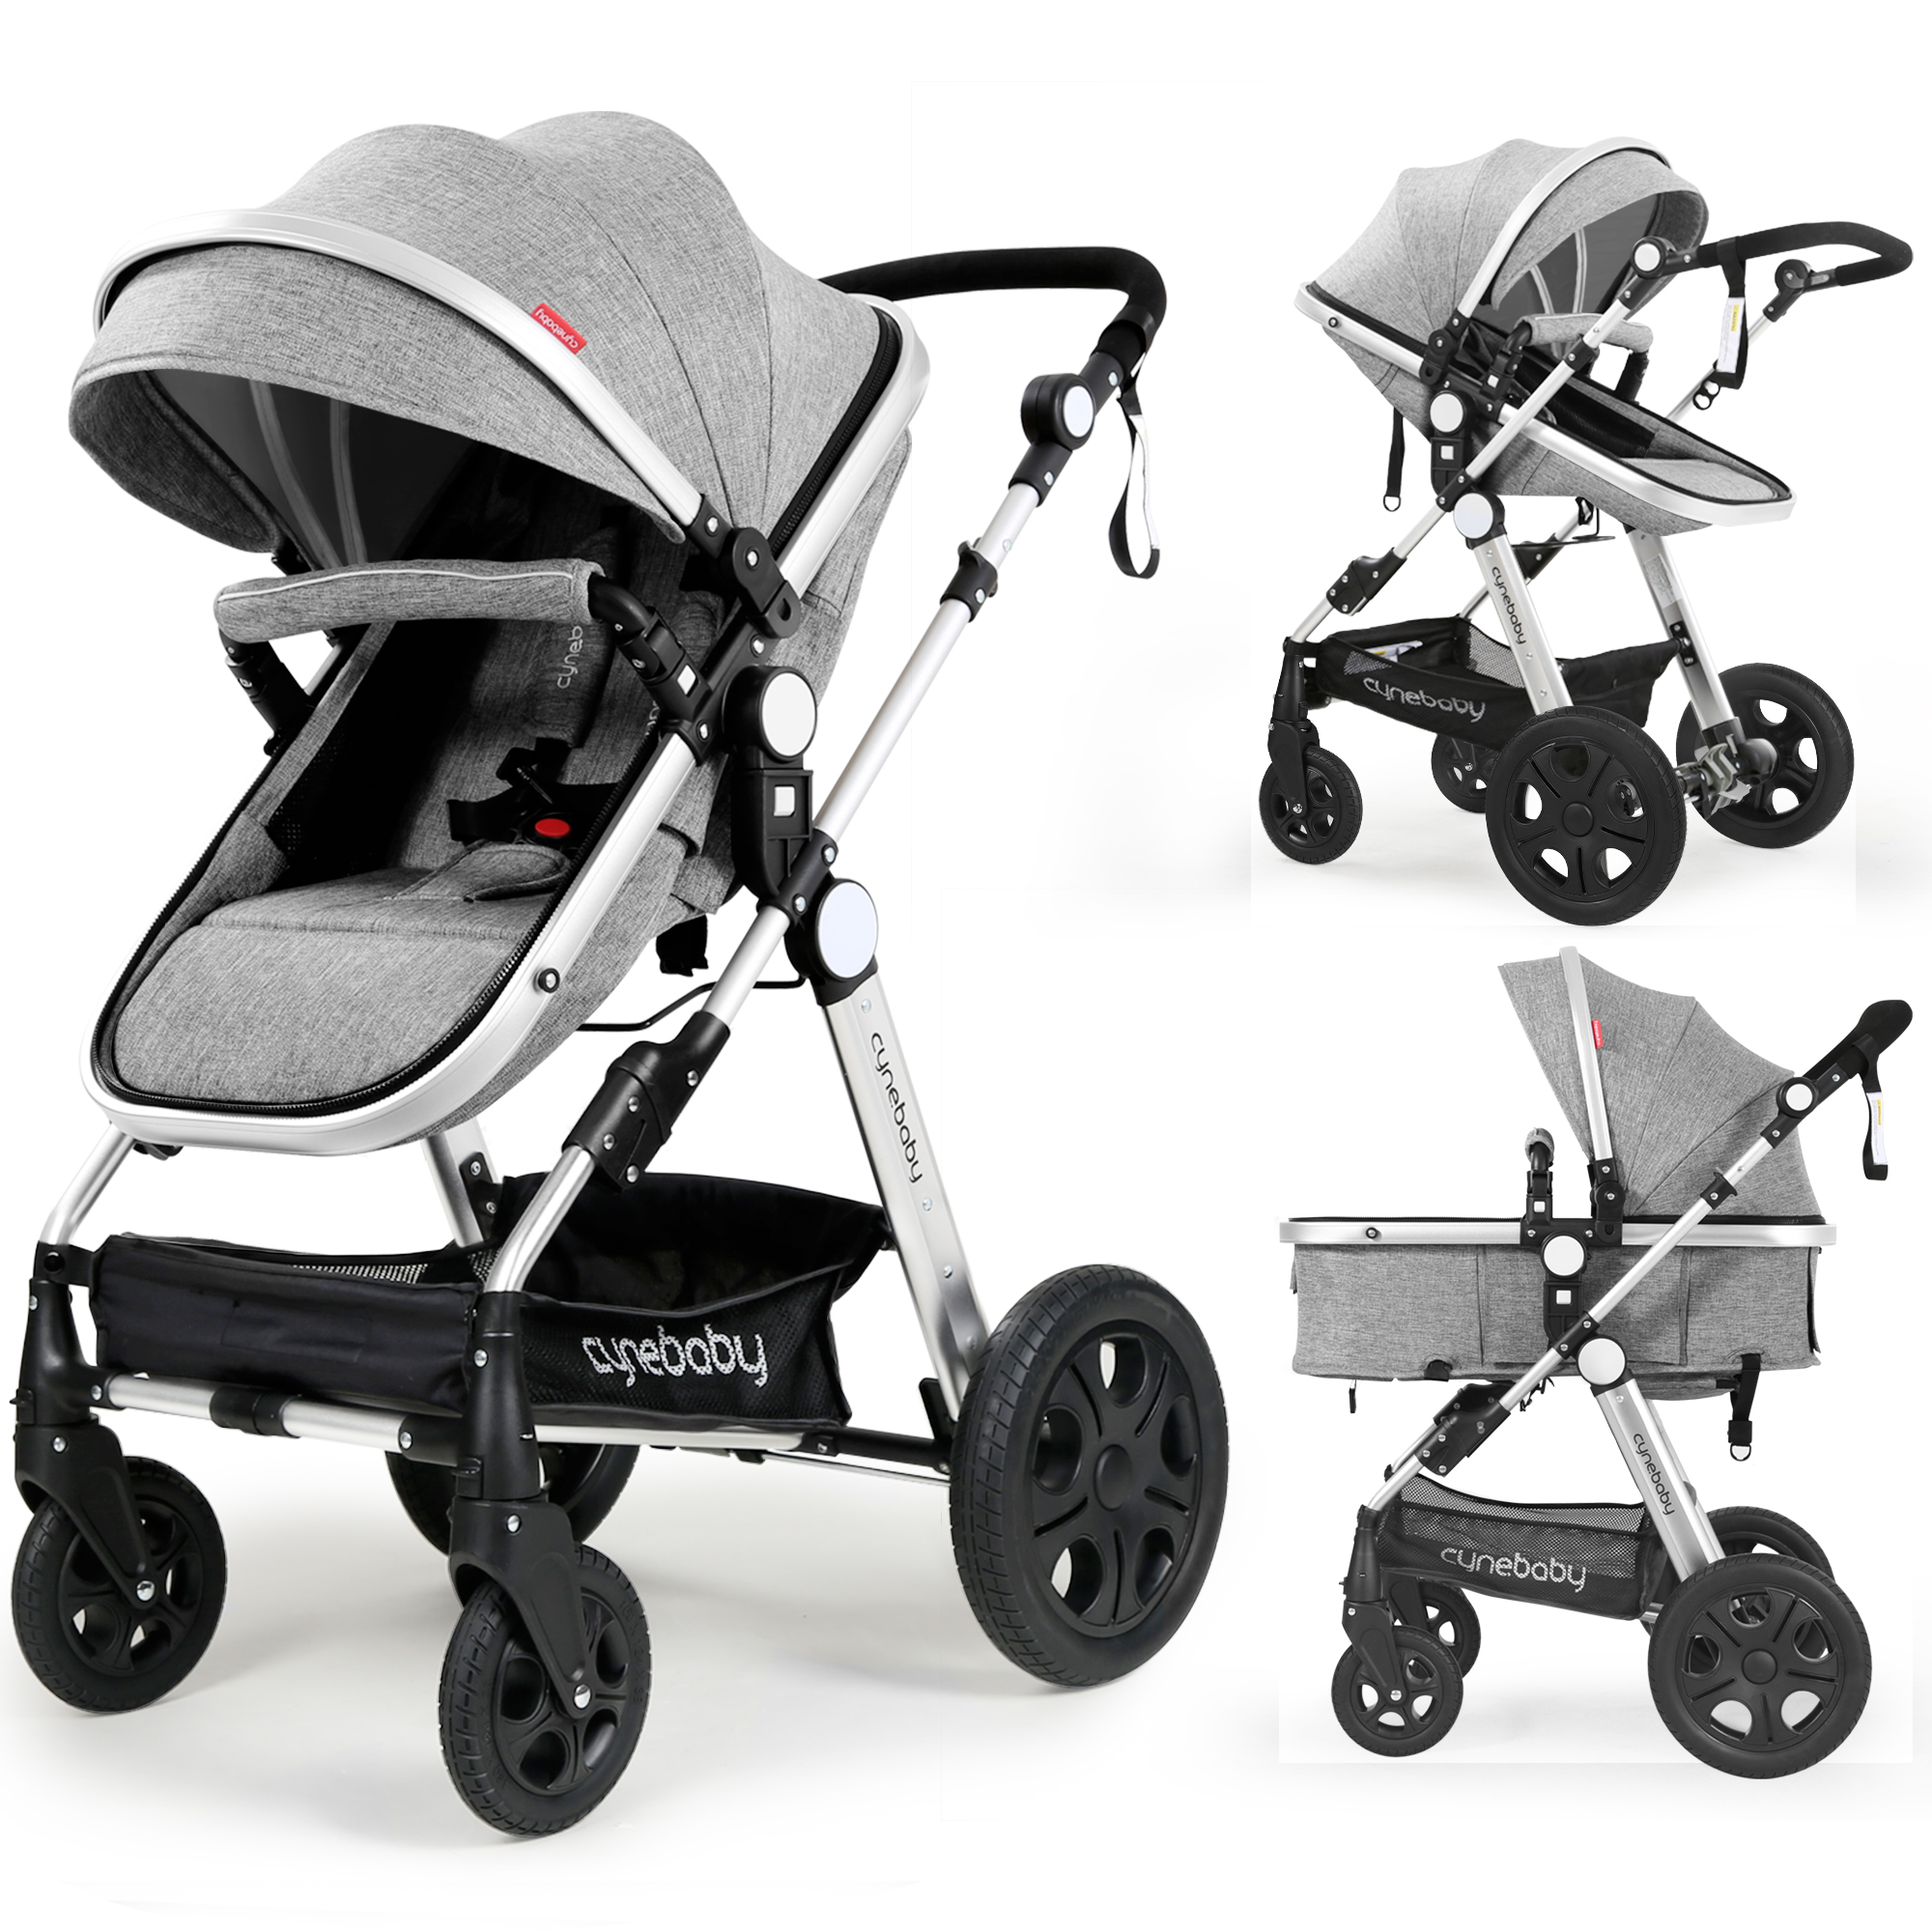 Cynebaby Newborn Infant Toddler Baby Stroller for Newborn Baby, Gray - image 1 of 9